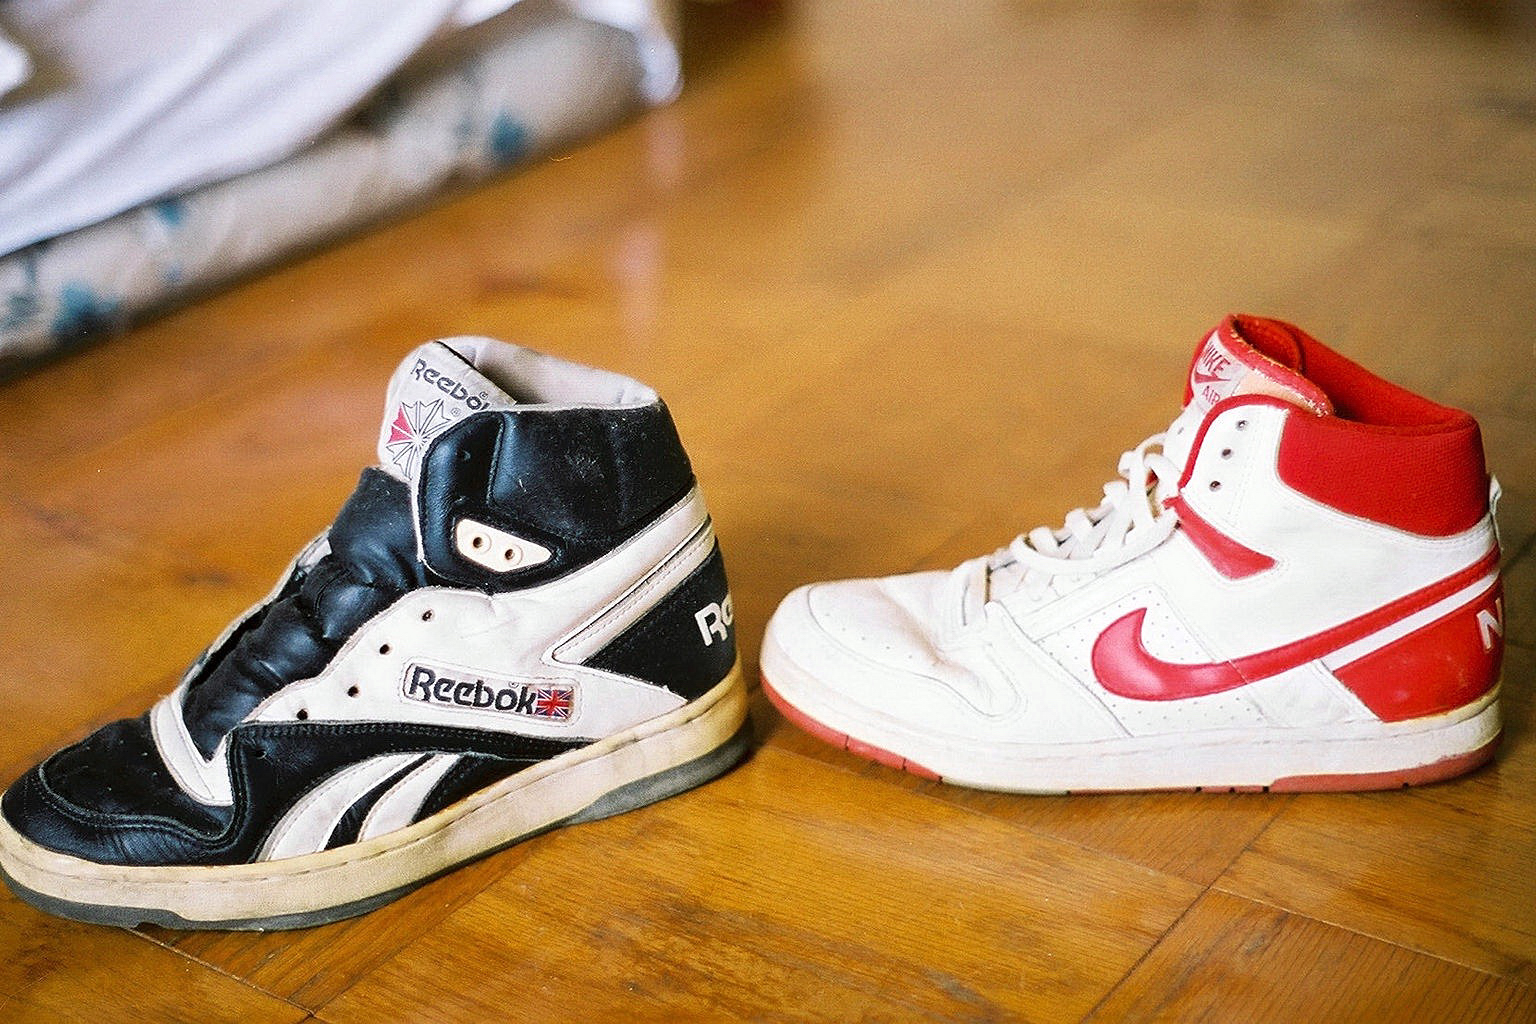 old reebok basketball shoes